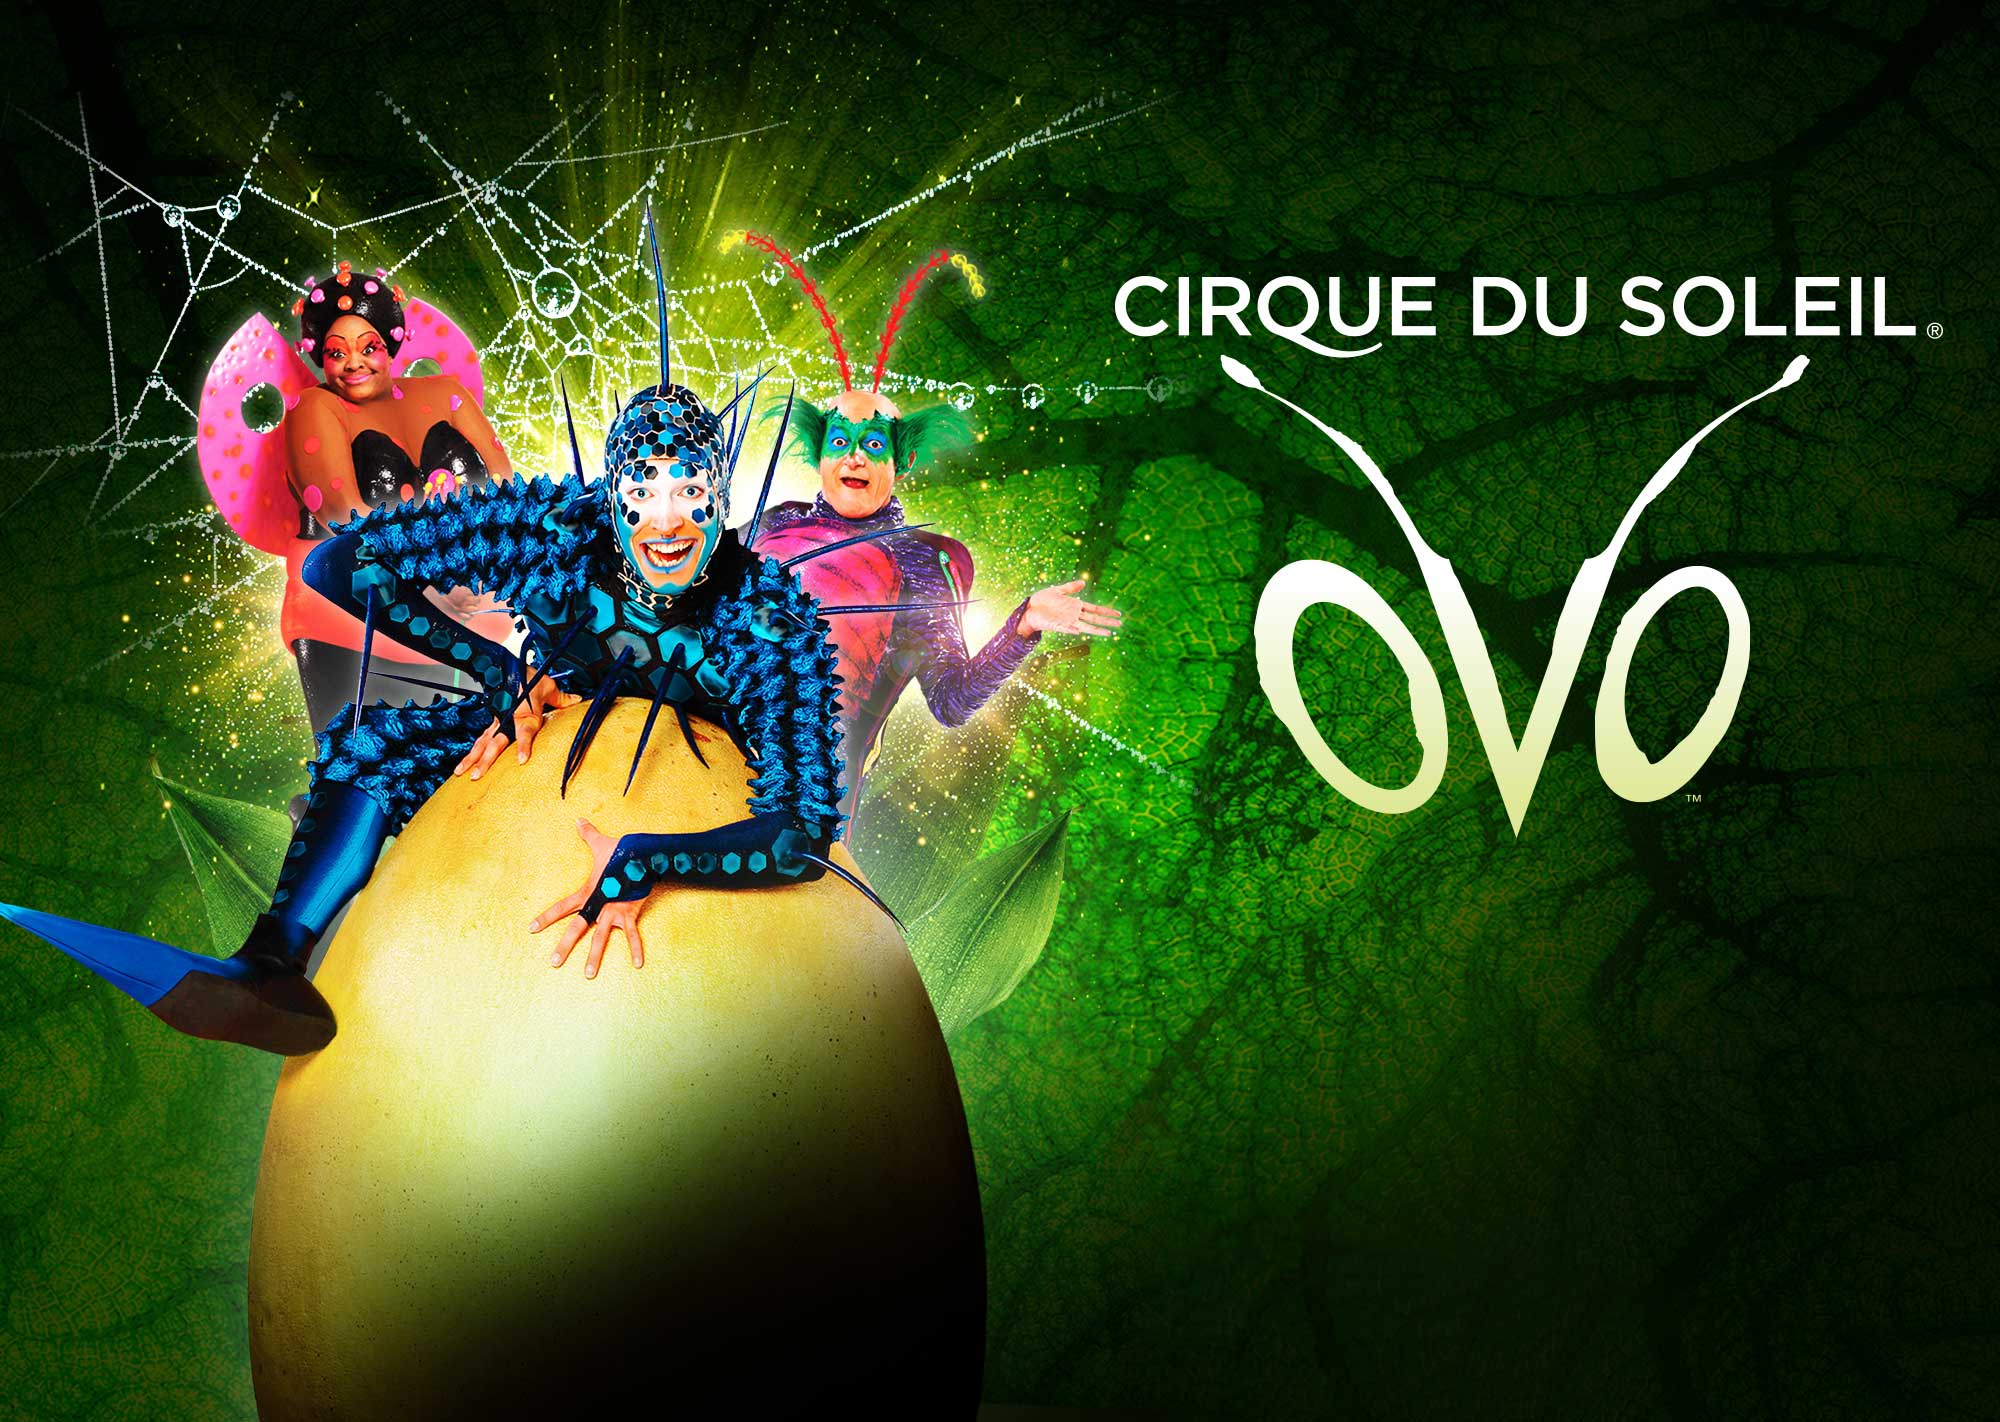 OVO – a buzzing Cirque du Soleil spectacular – is coming to Cedar Park